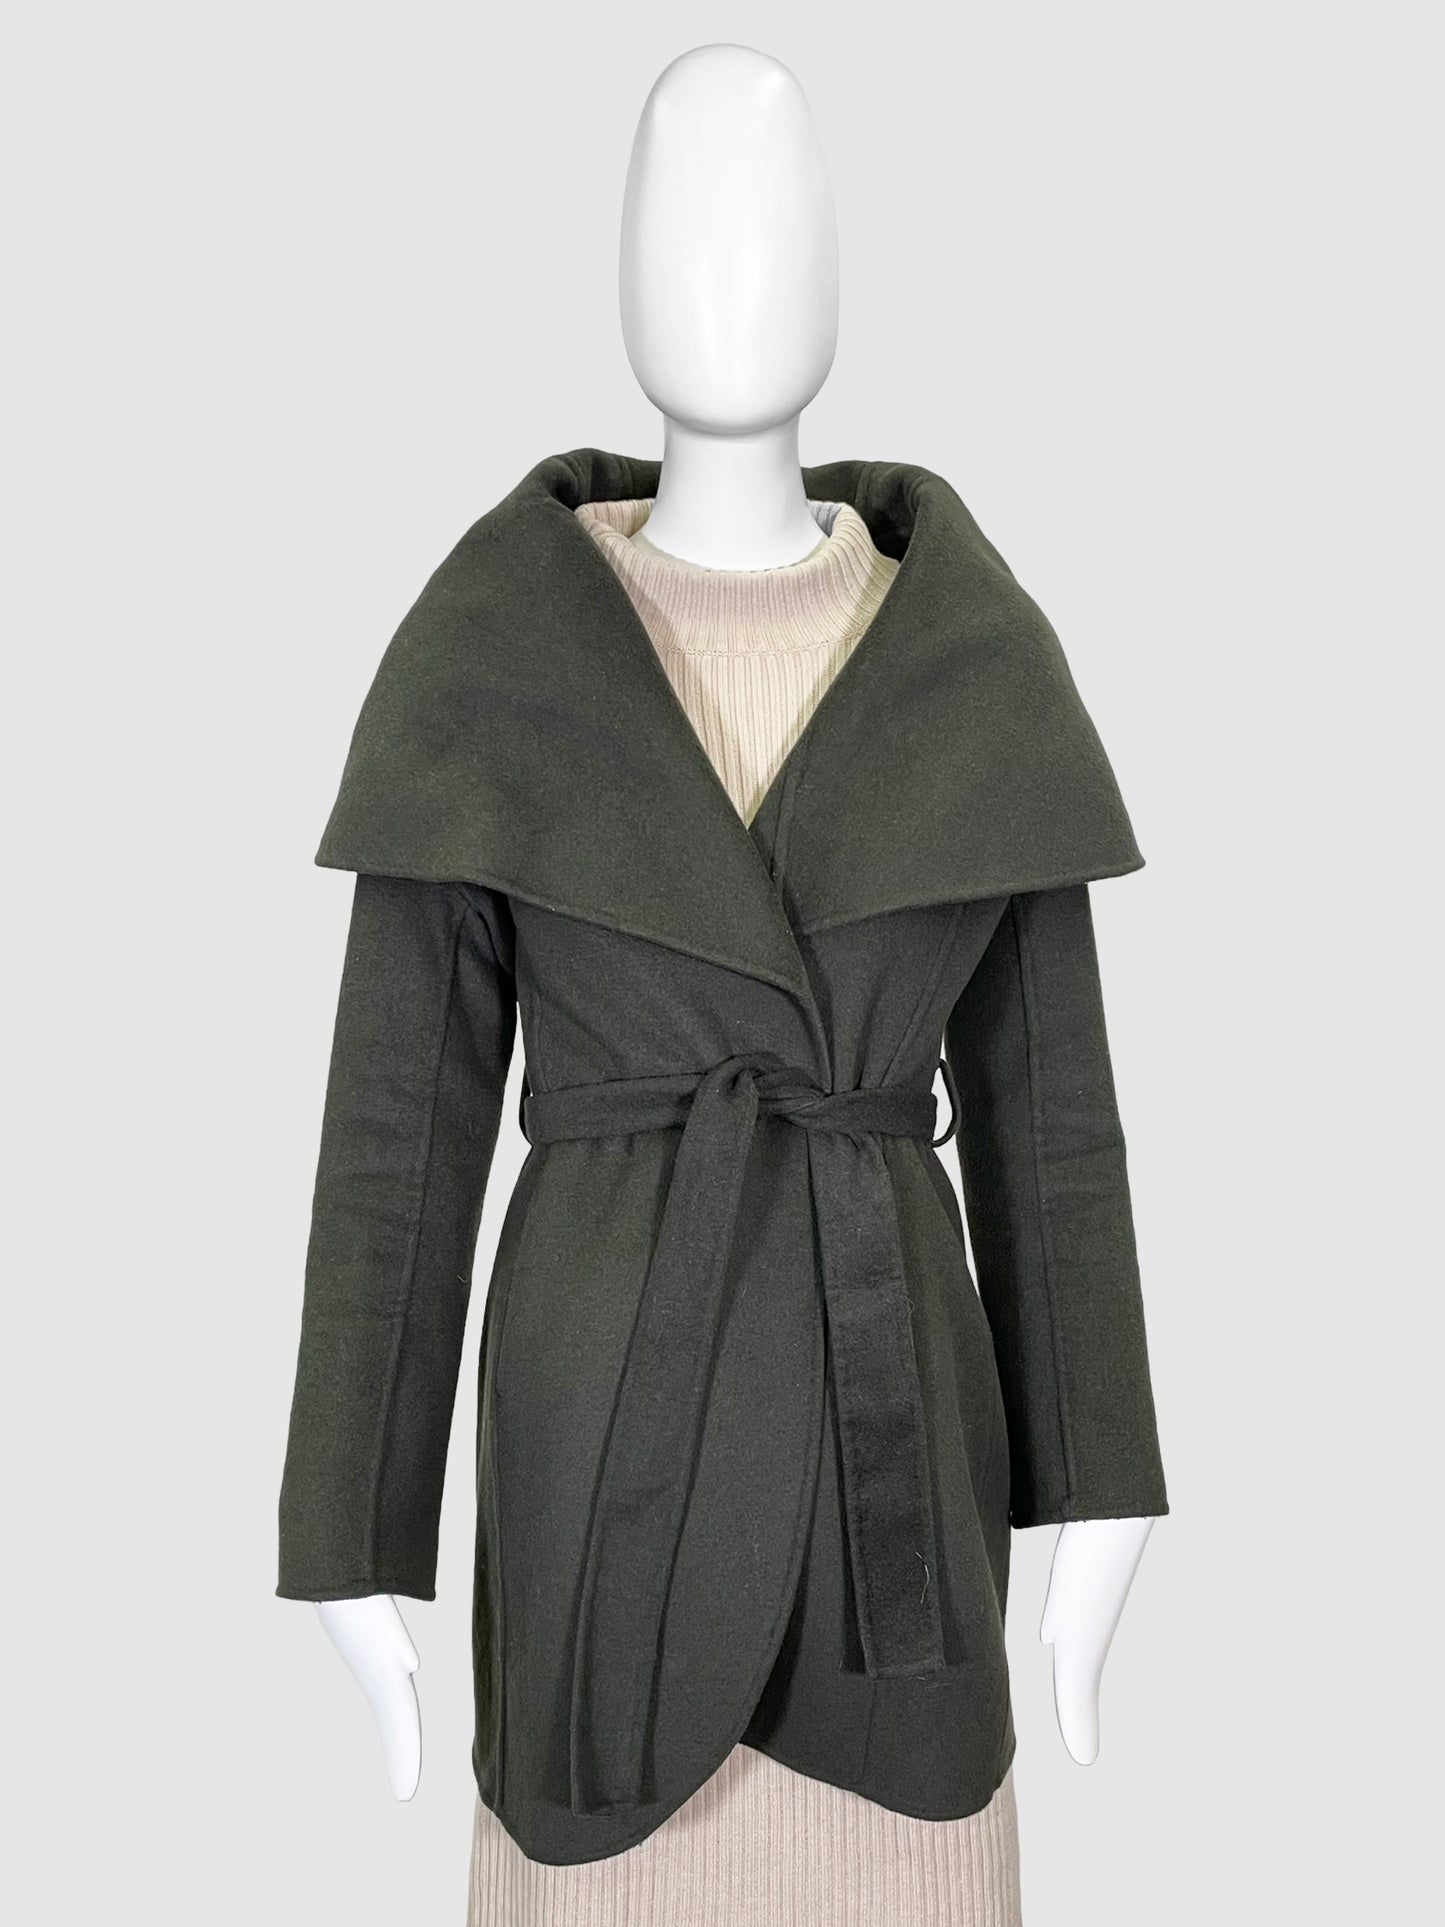 Karl Lagerfeld Wool Coat with Belt - Size M